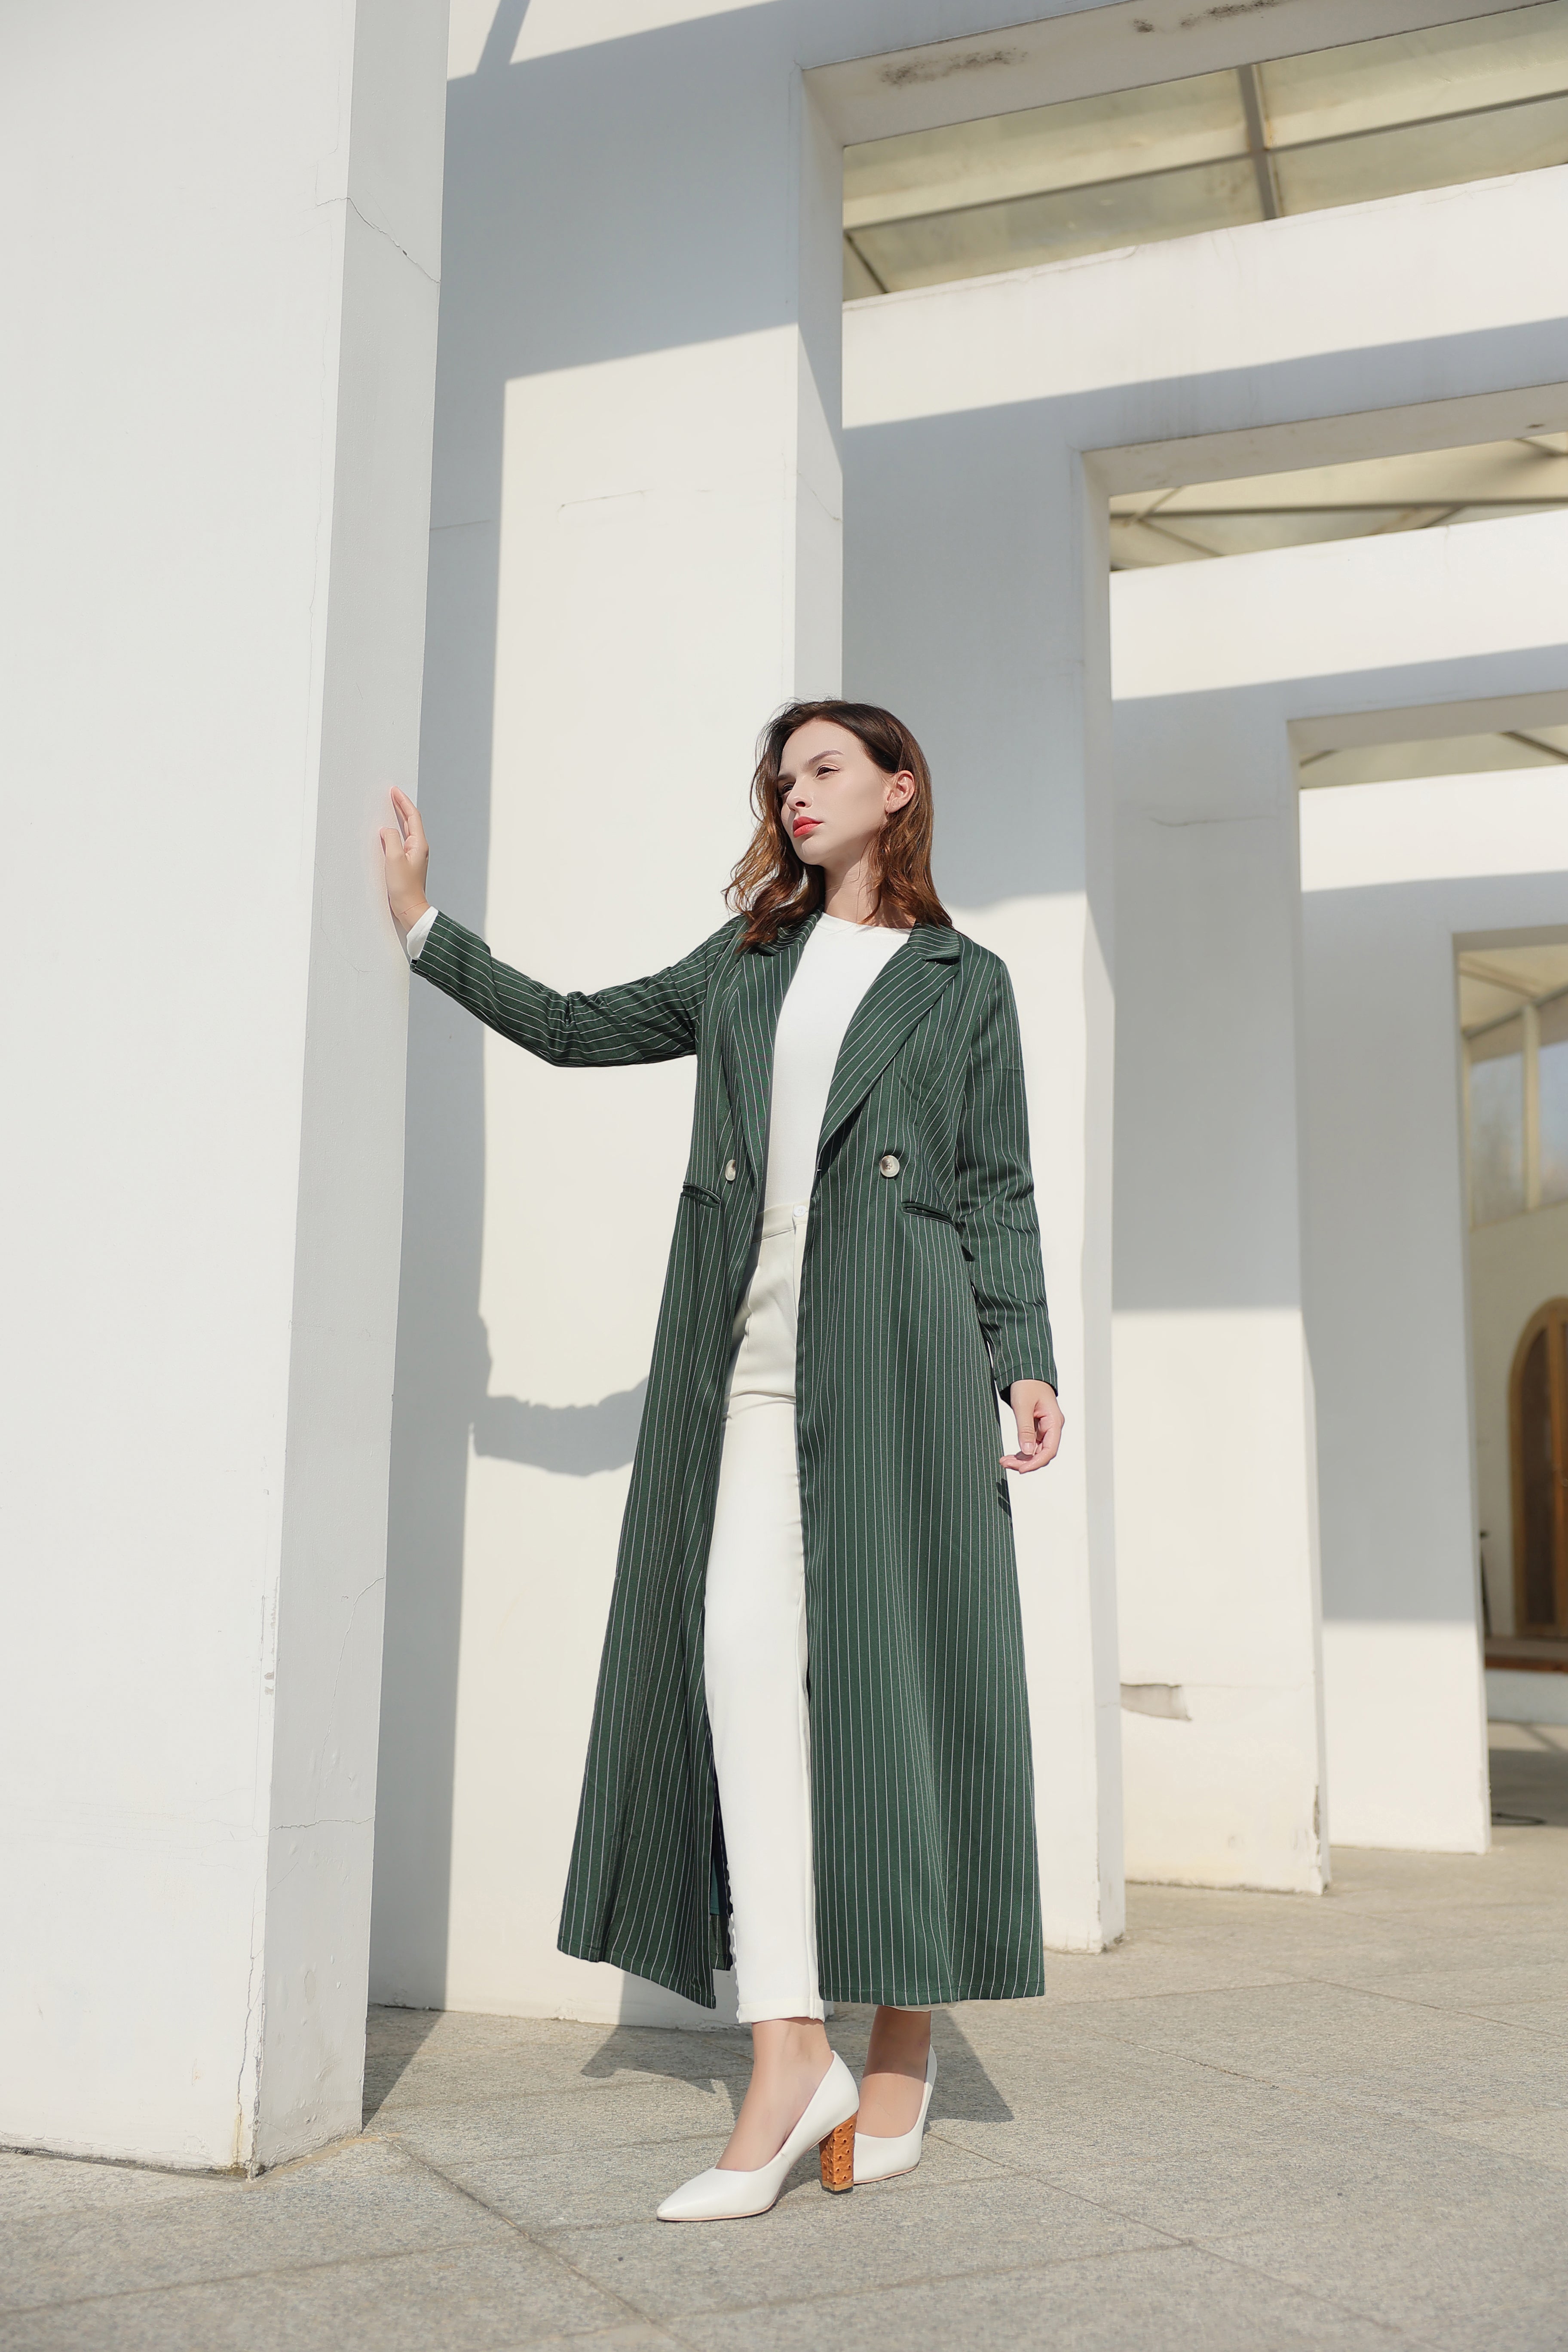 Fern Green Striped Suit Abaya